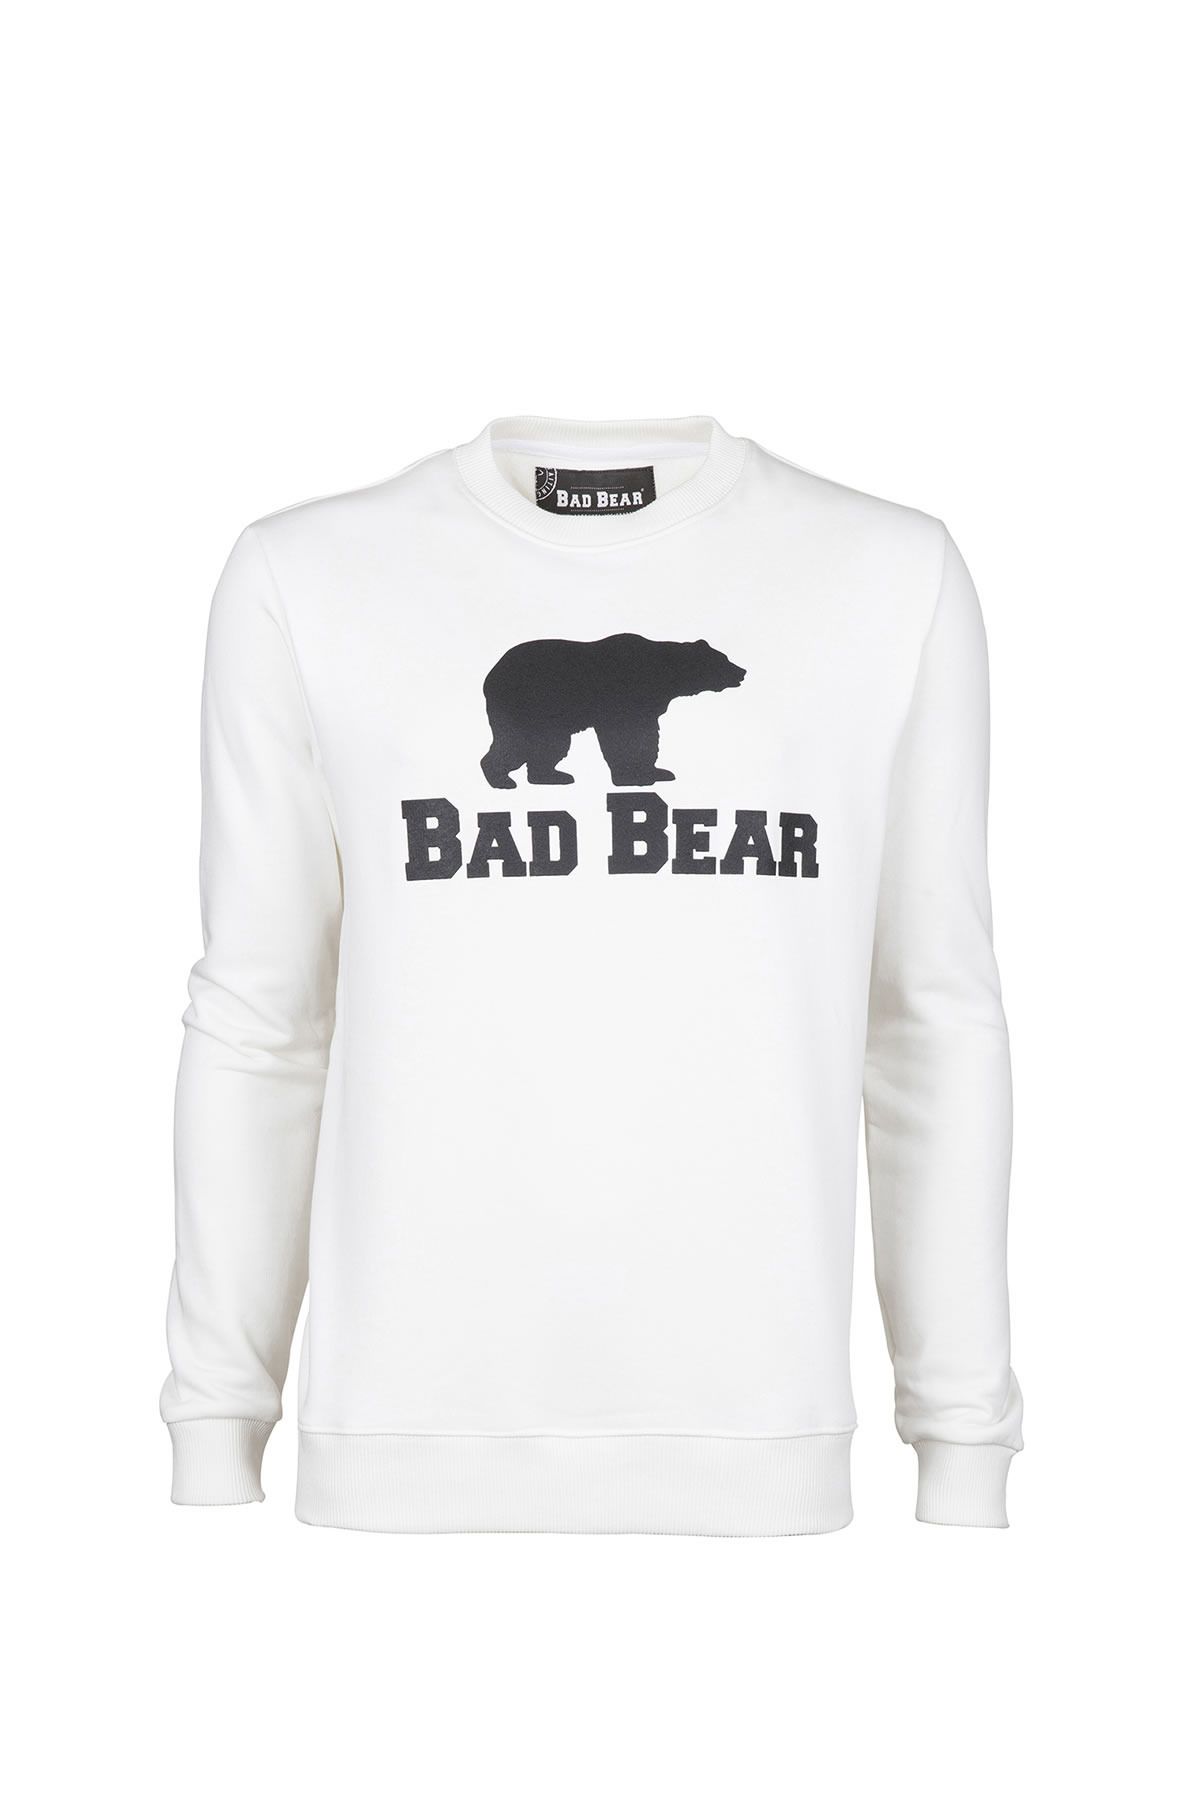 Bad Bear Bad Bear Crewneck Erkek Sweatshirt 20.02.12.011-c04